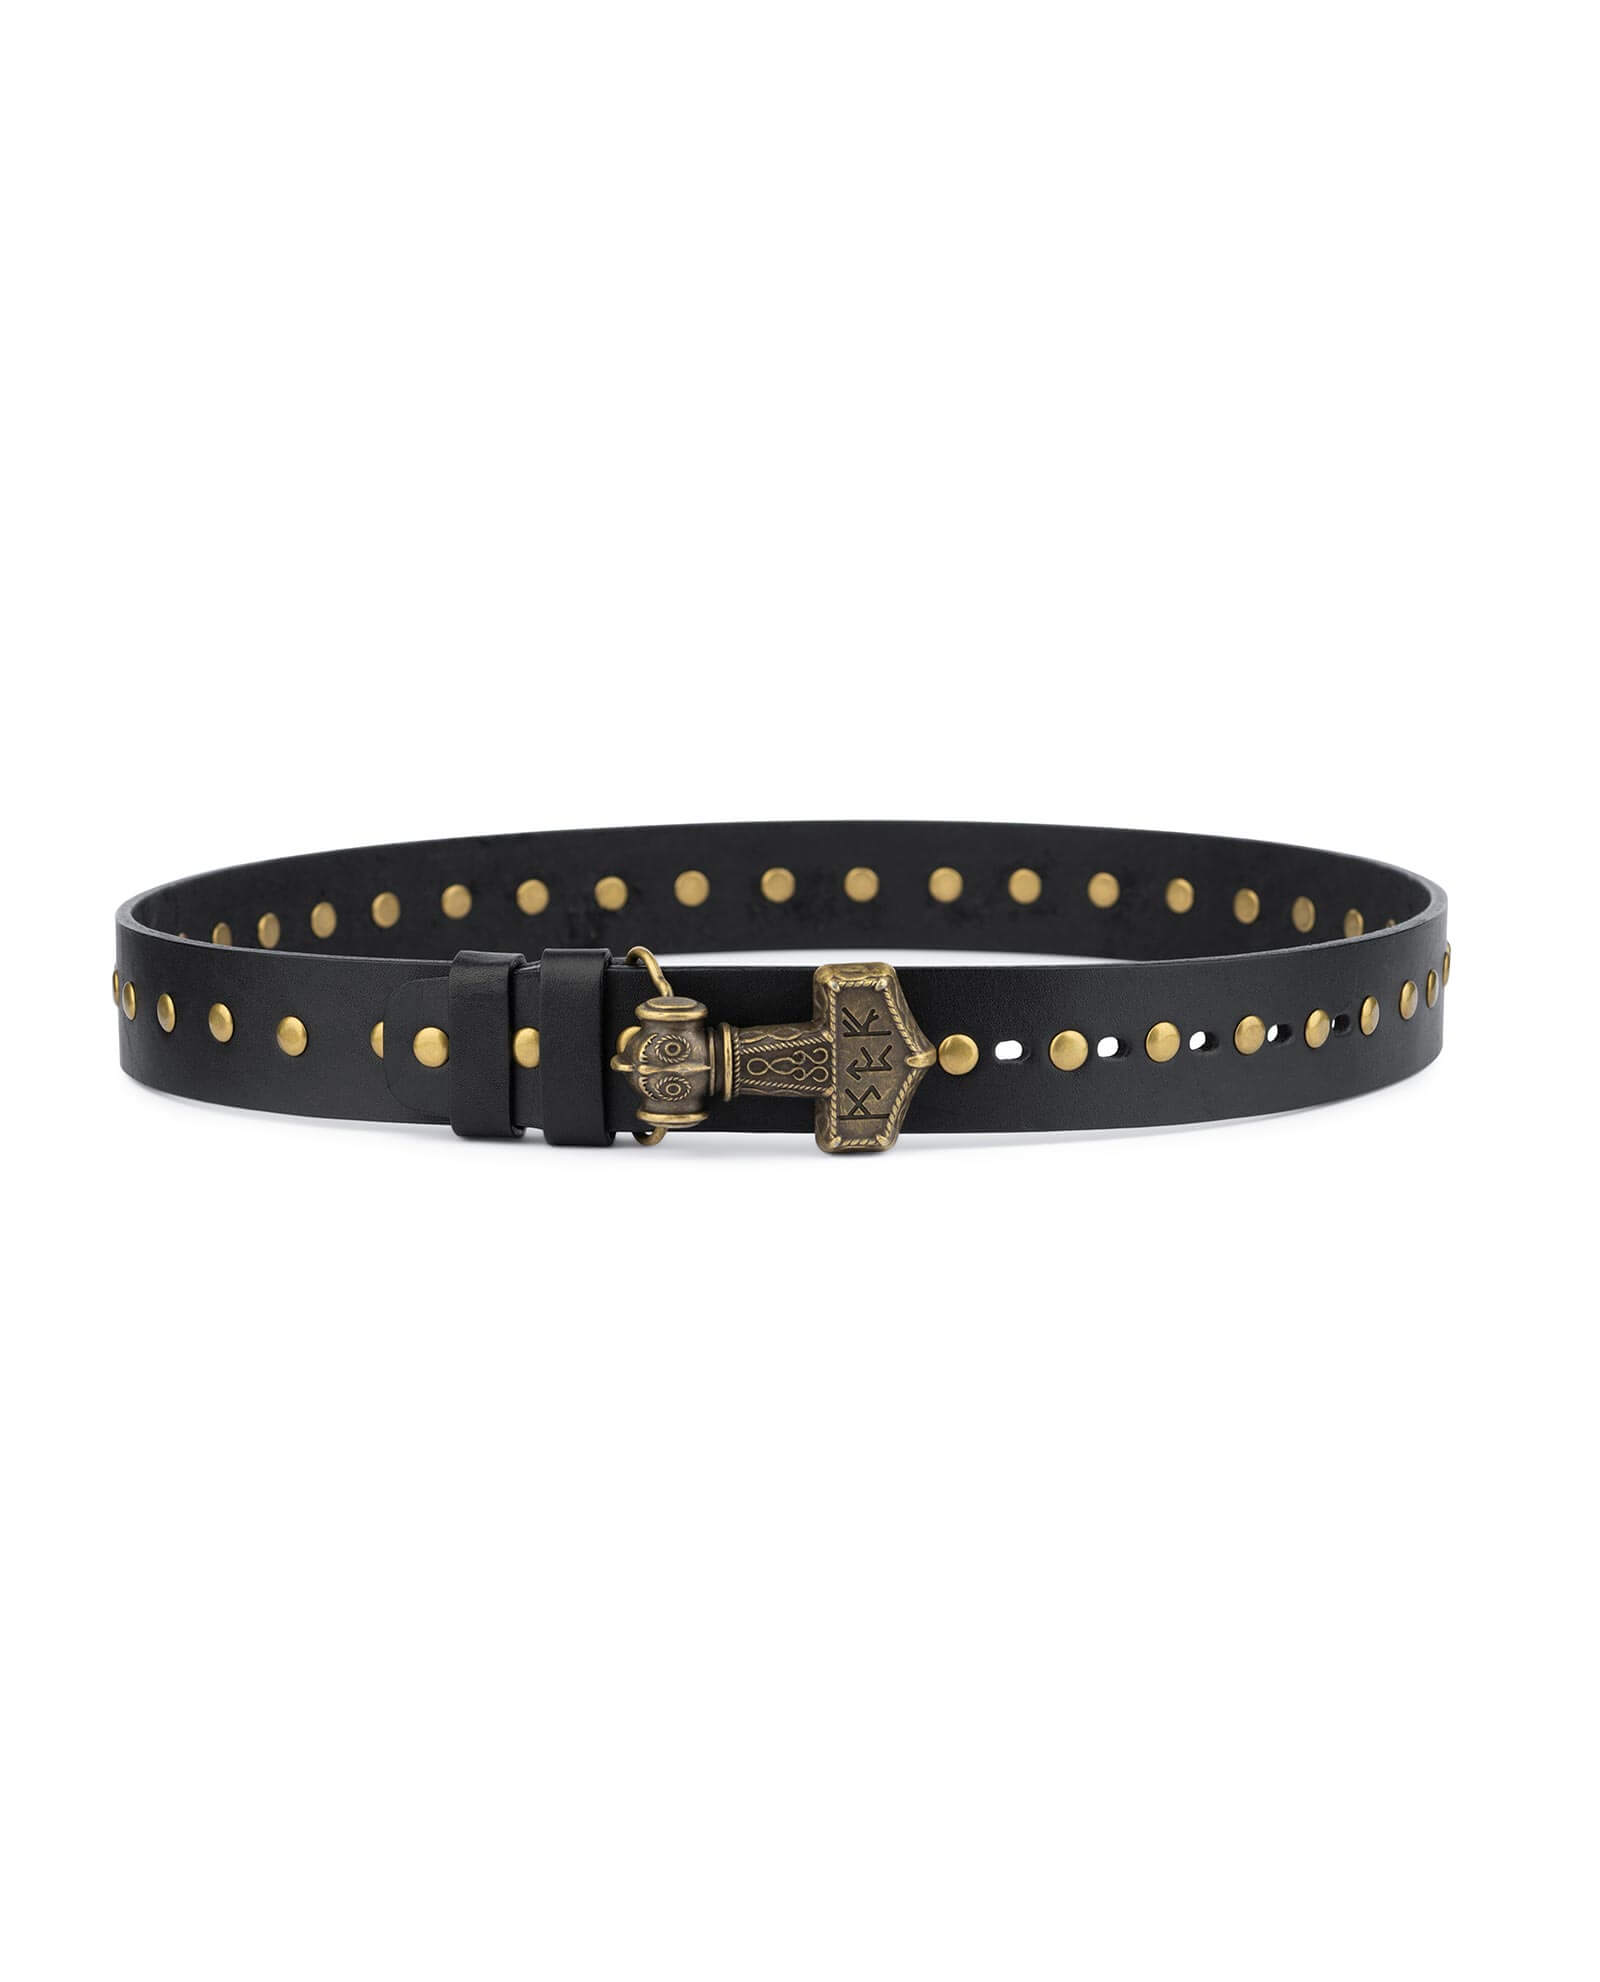 Buy Black Studded Viking Leather Belt | LeatherBeltsOnline.com